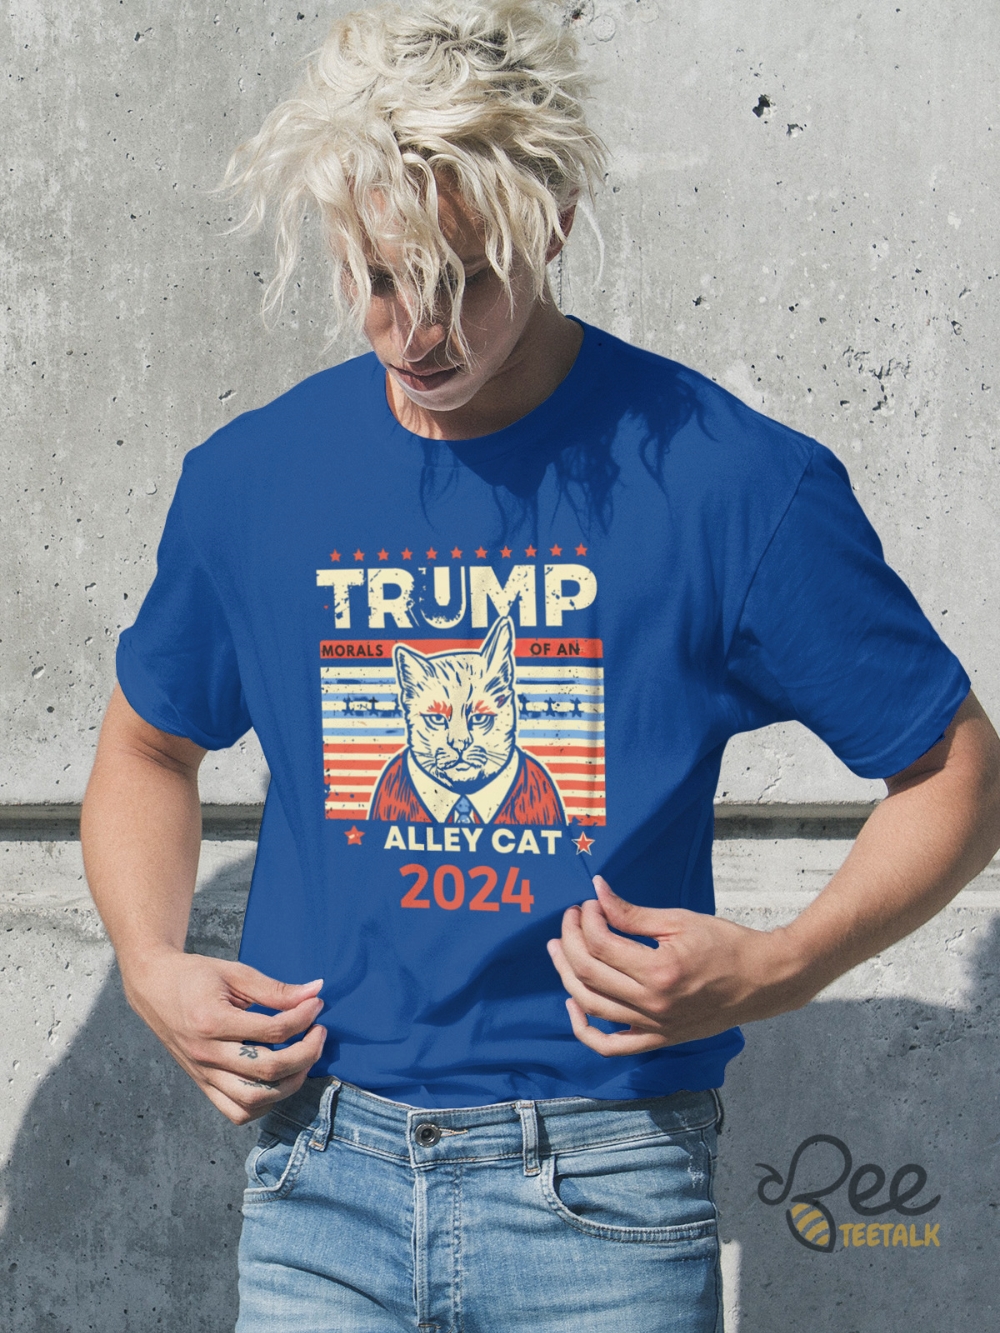 Morals Of An Alley Cat Meme Shirt Funny Donald Trump Joe Biden Debate Shirts